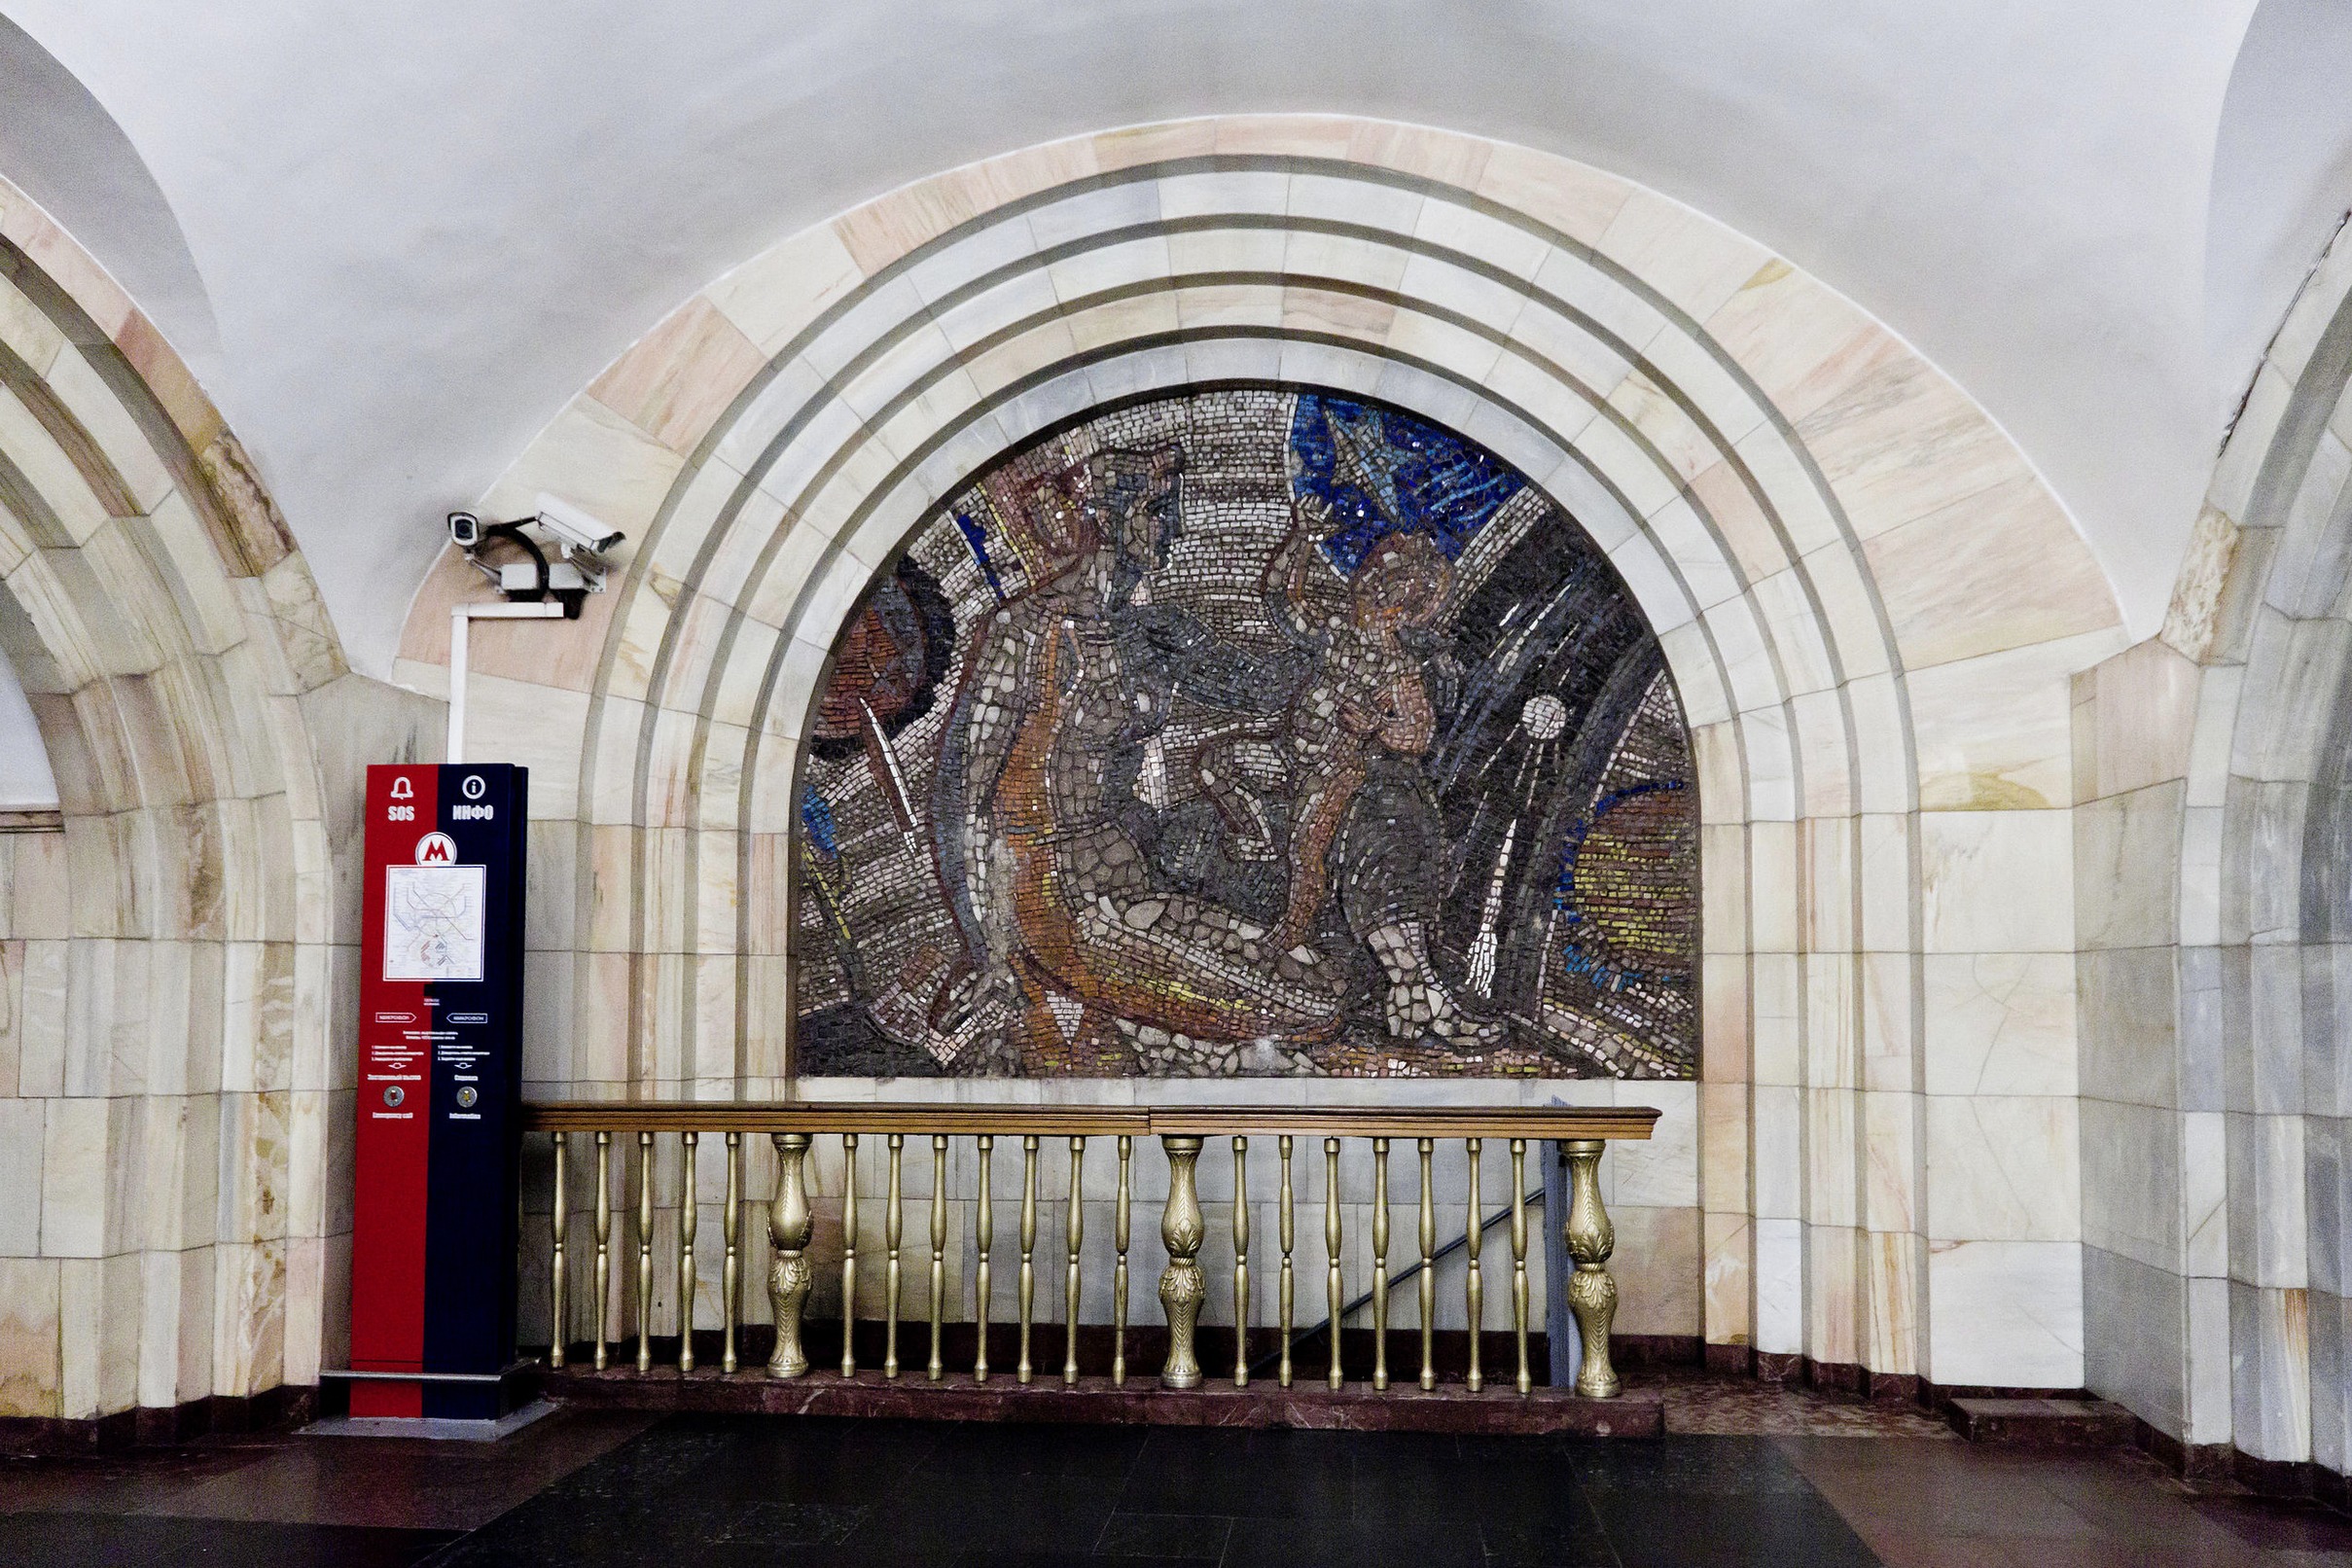 станция метро серпуховская фото